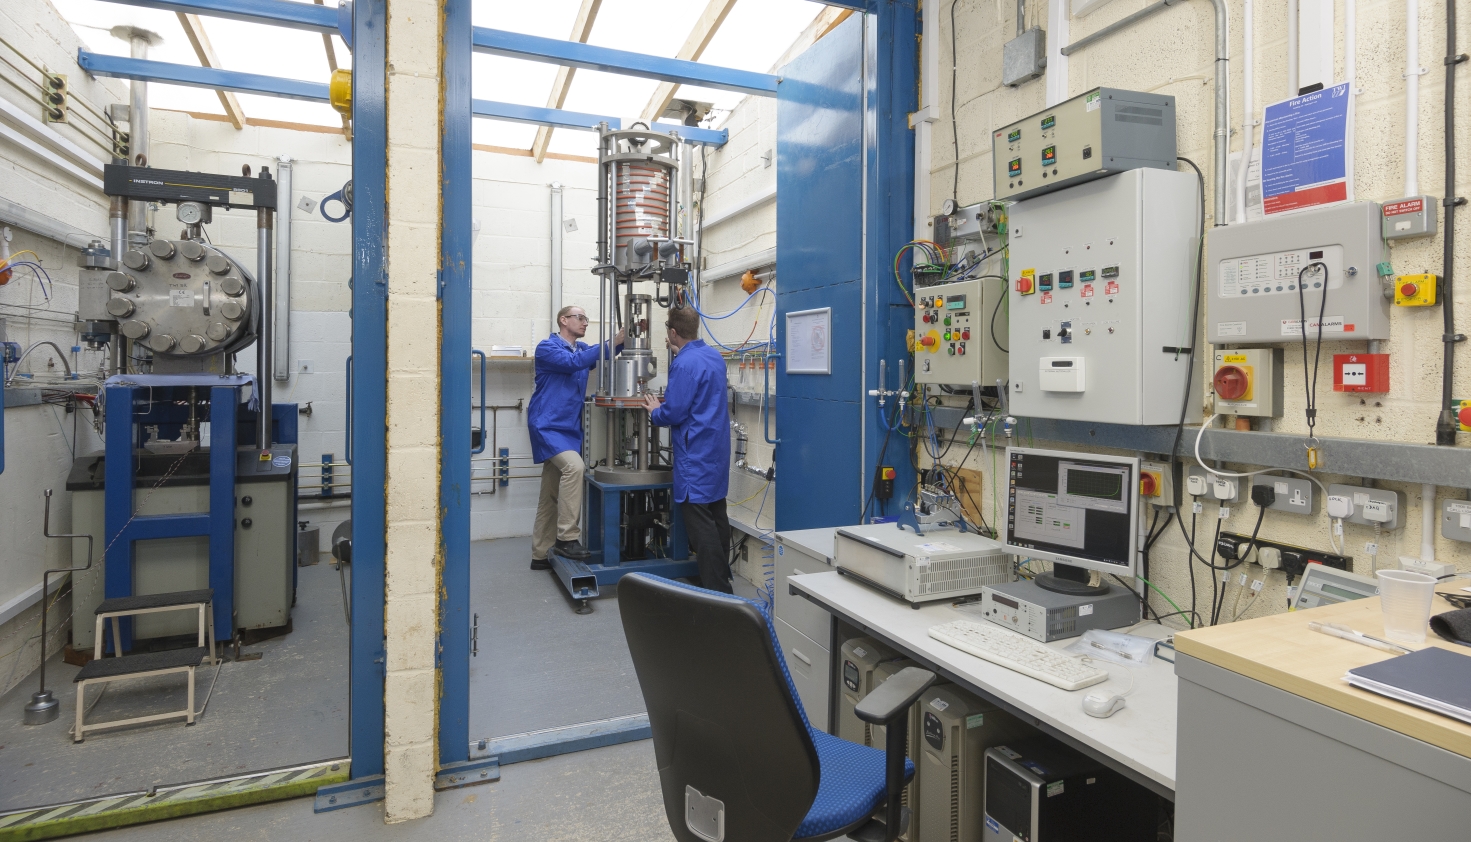 TWI's high-pressure hydrogen testing facility